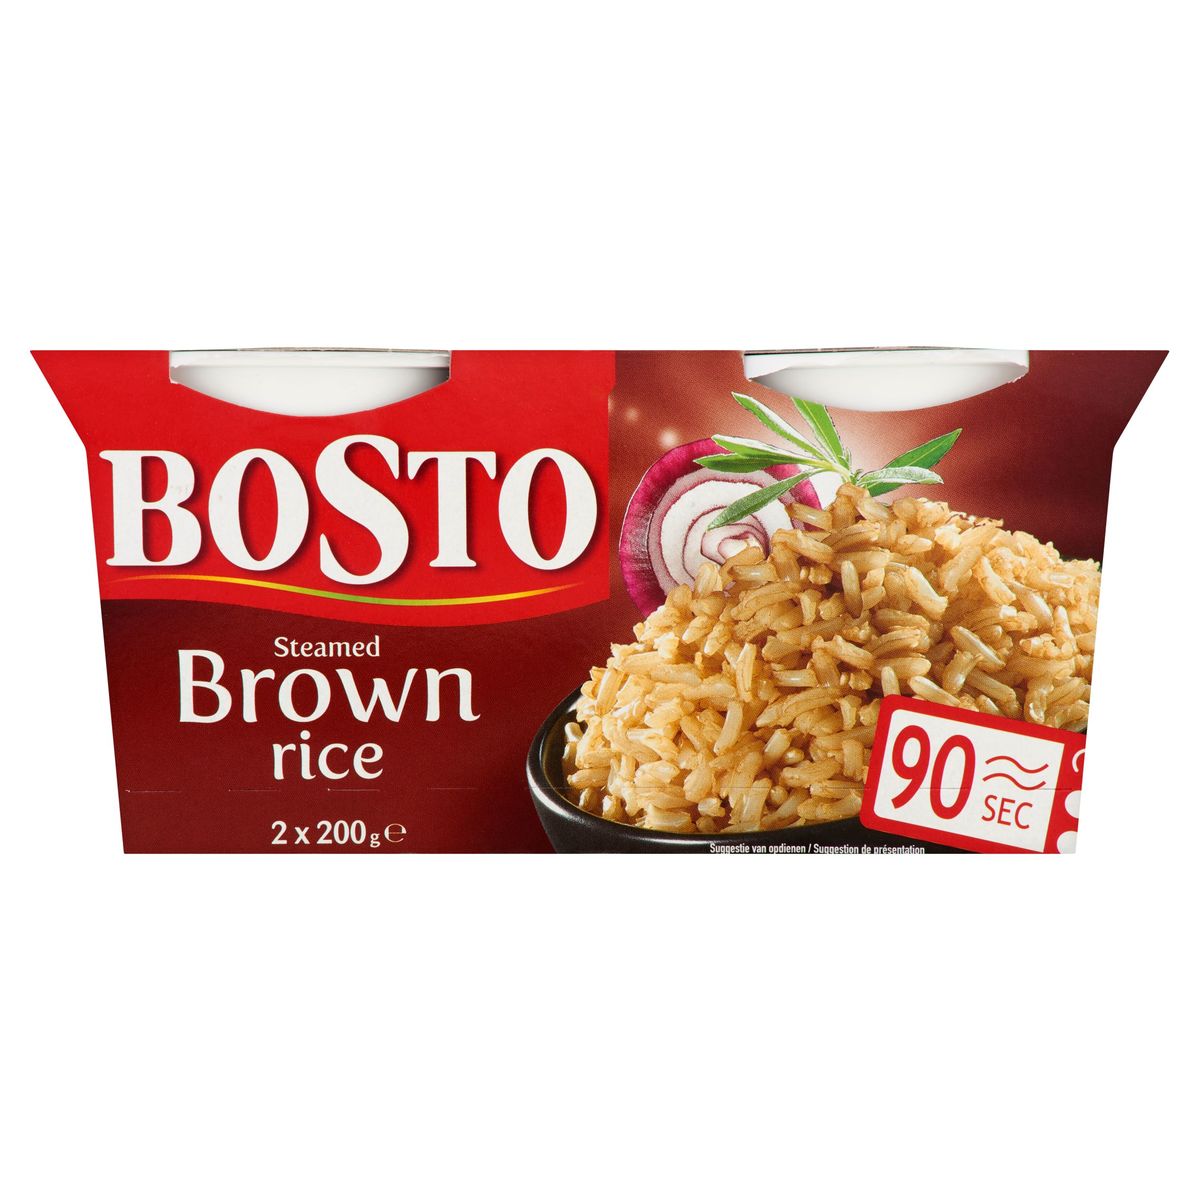 Bosto Steamed Brown Rice 2 x 200 g